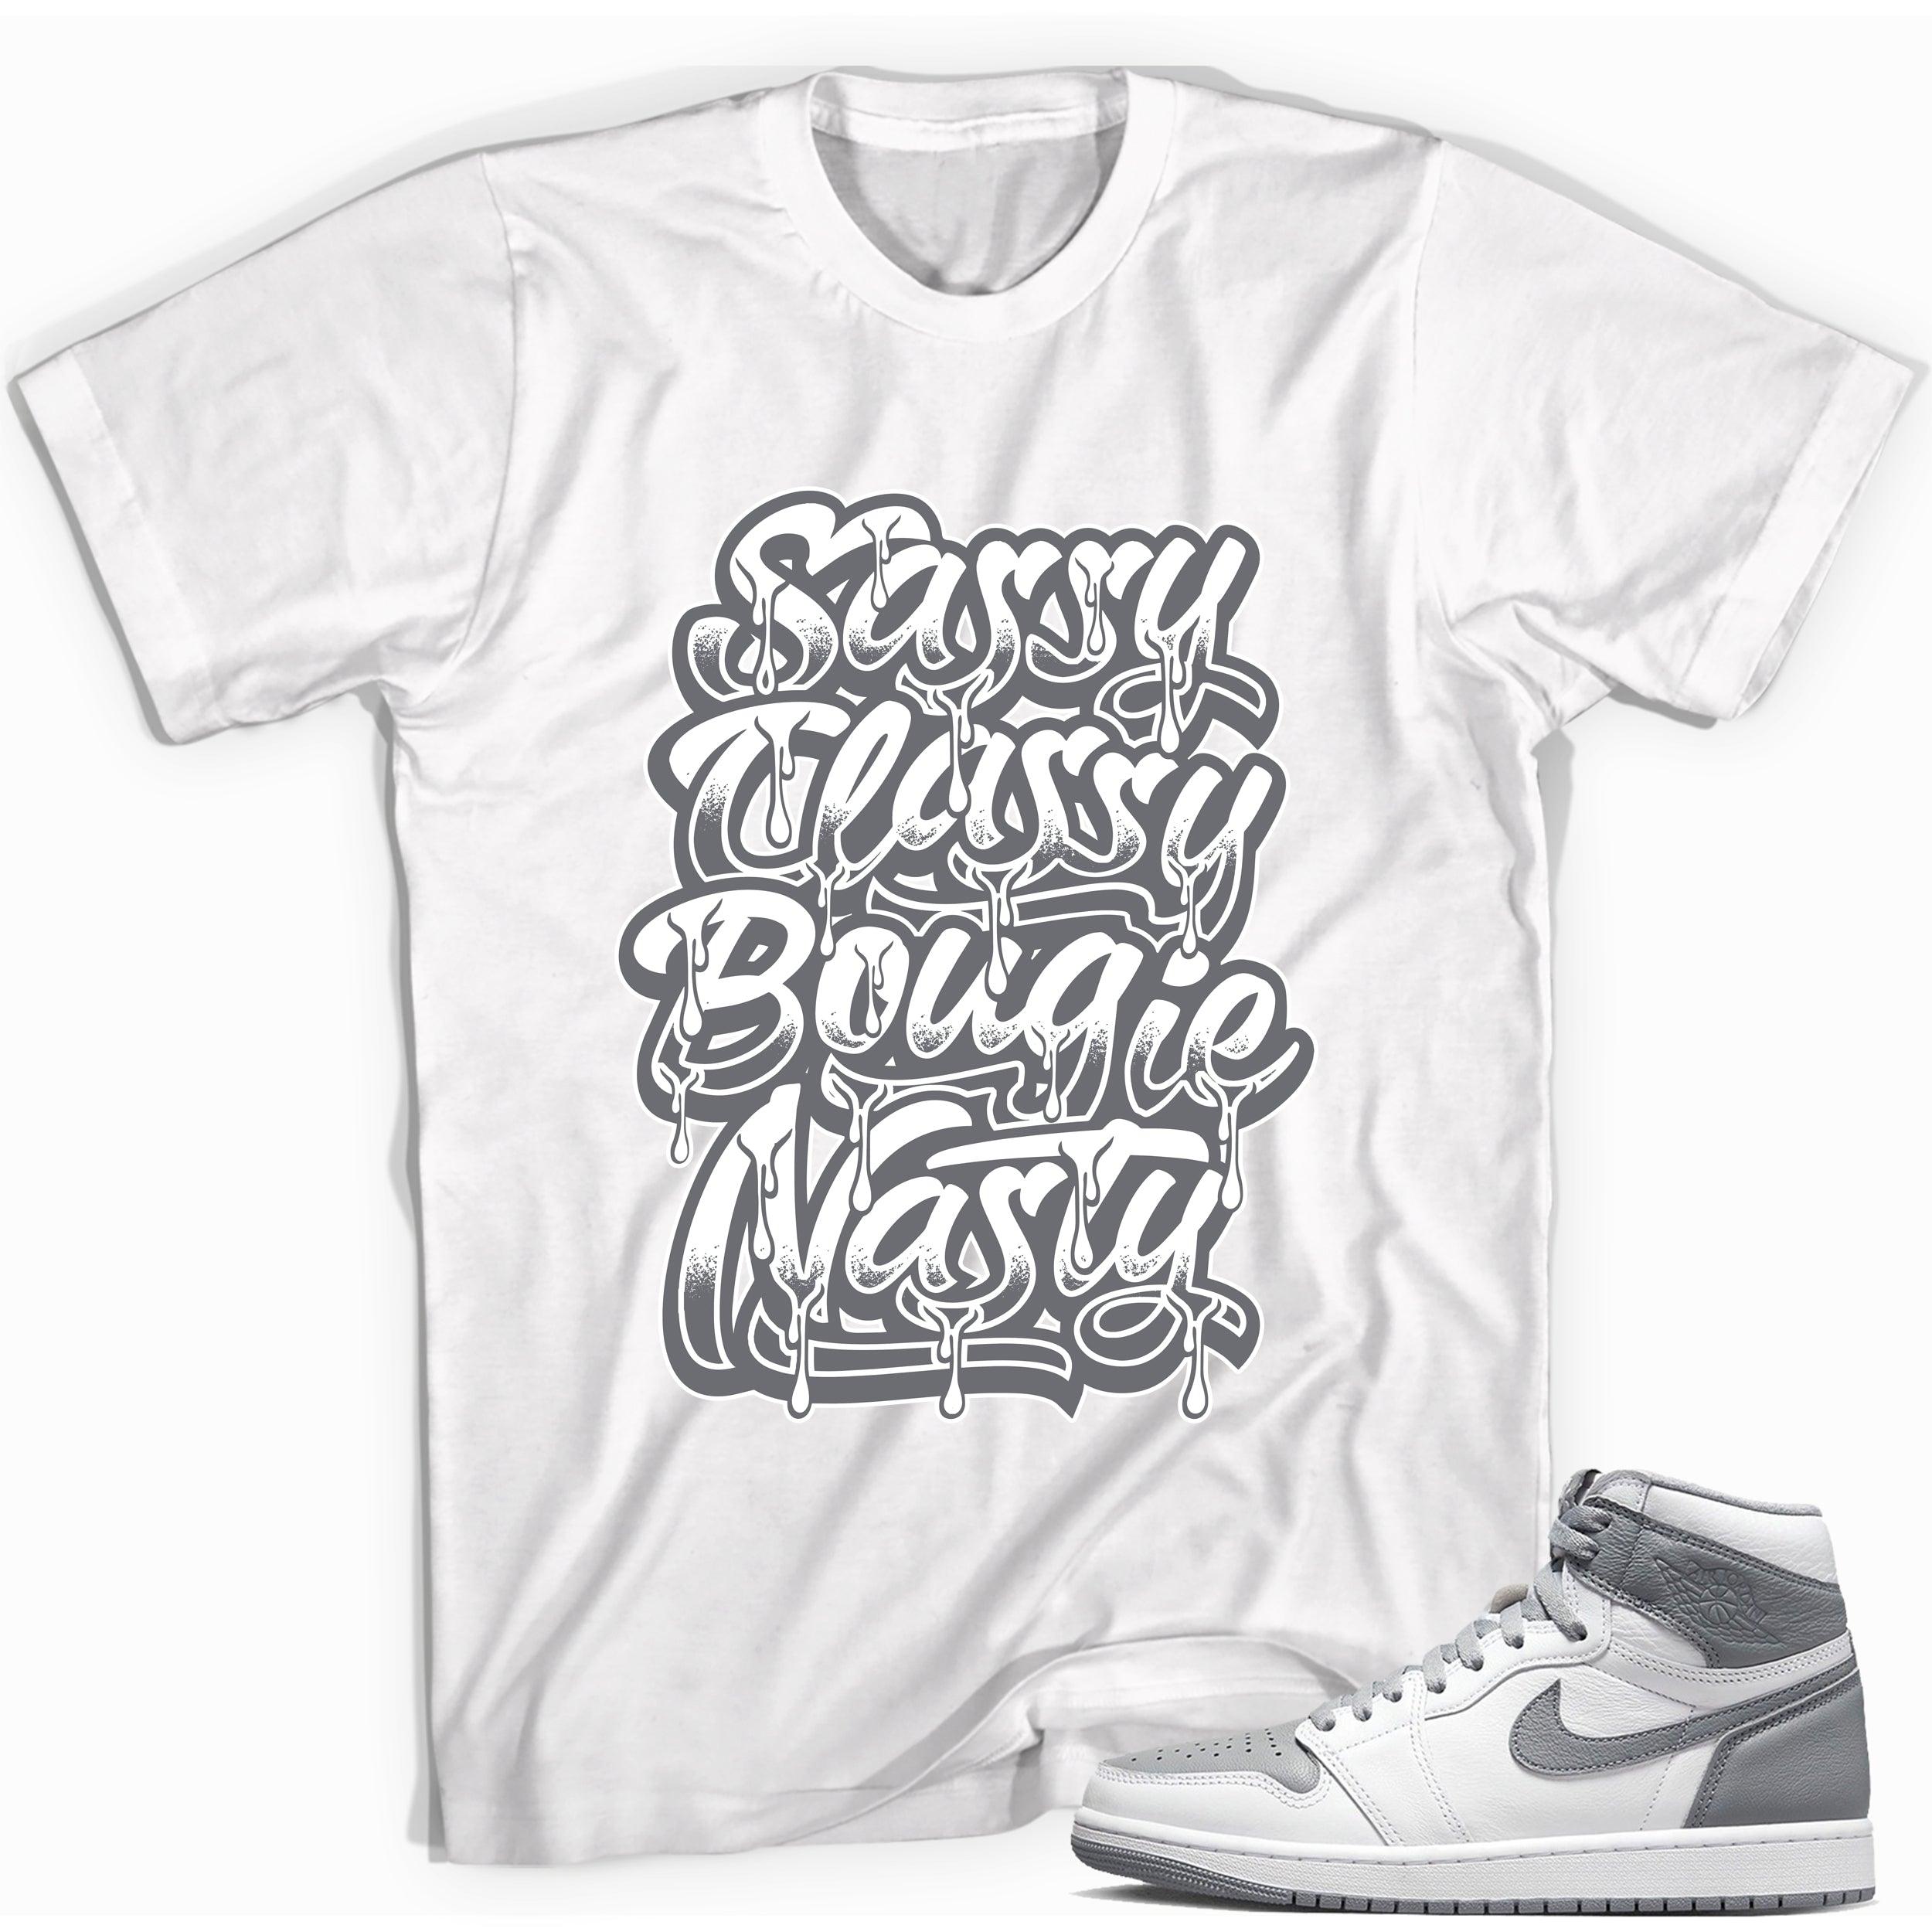 Sassy Classy Shirt for Jordan 1s photo